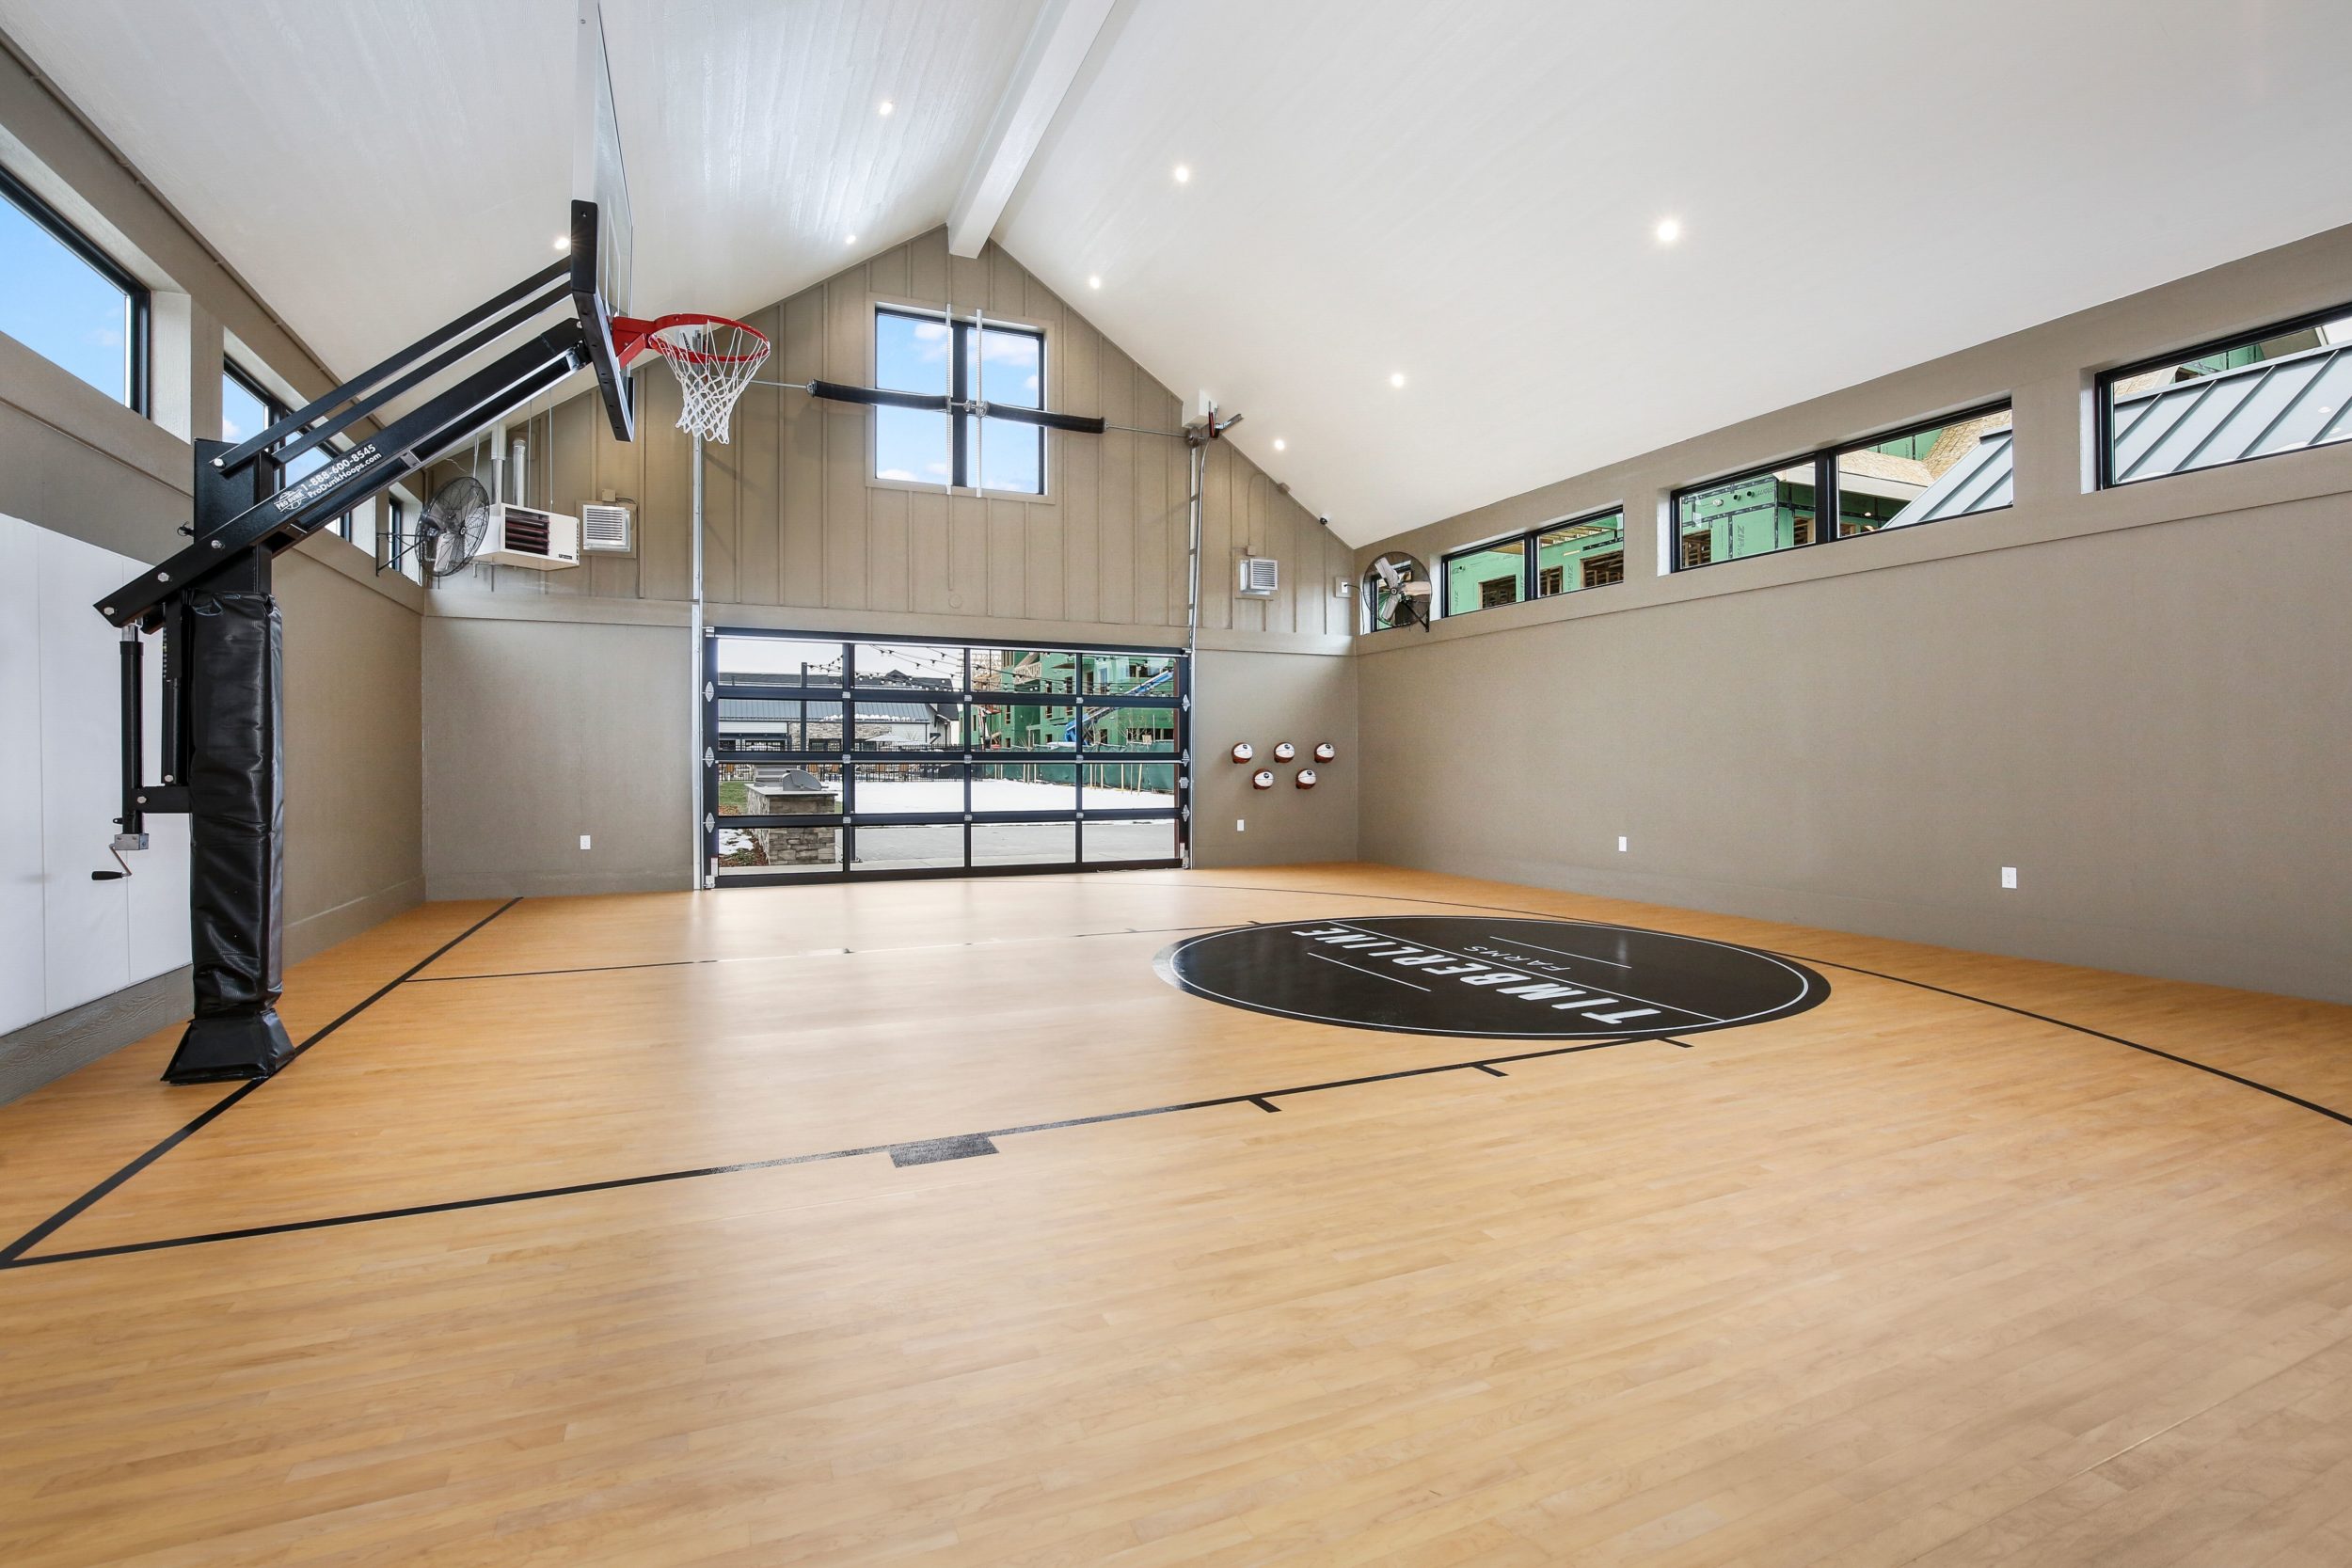 Timberline Basketball Court